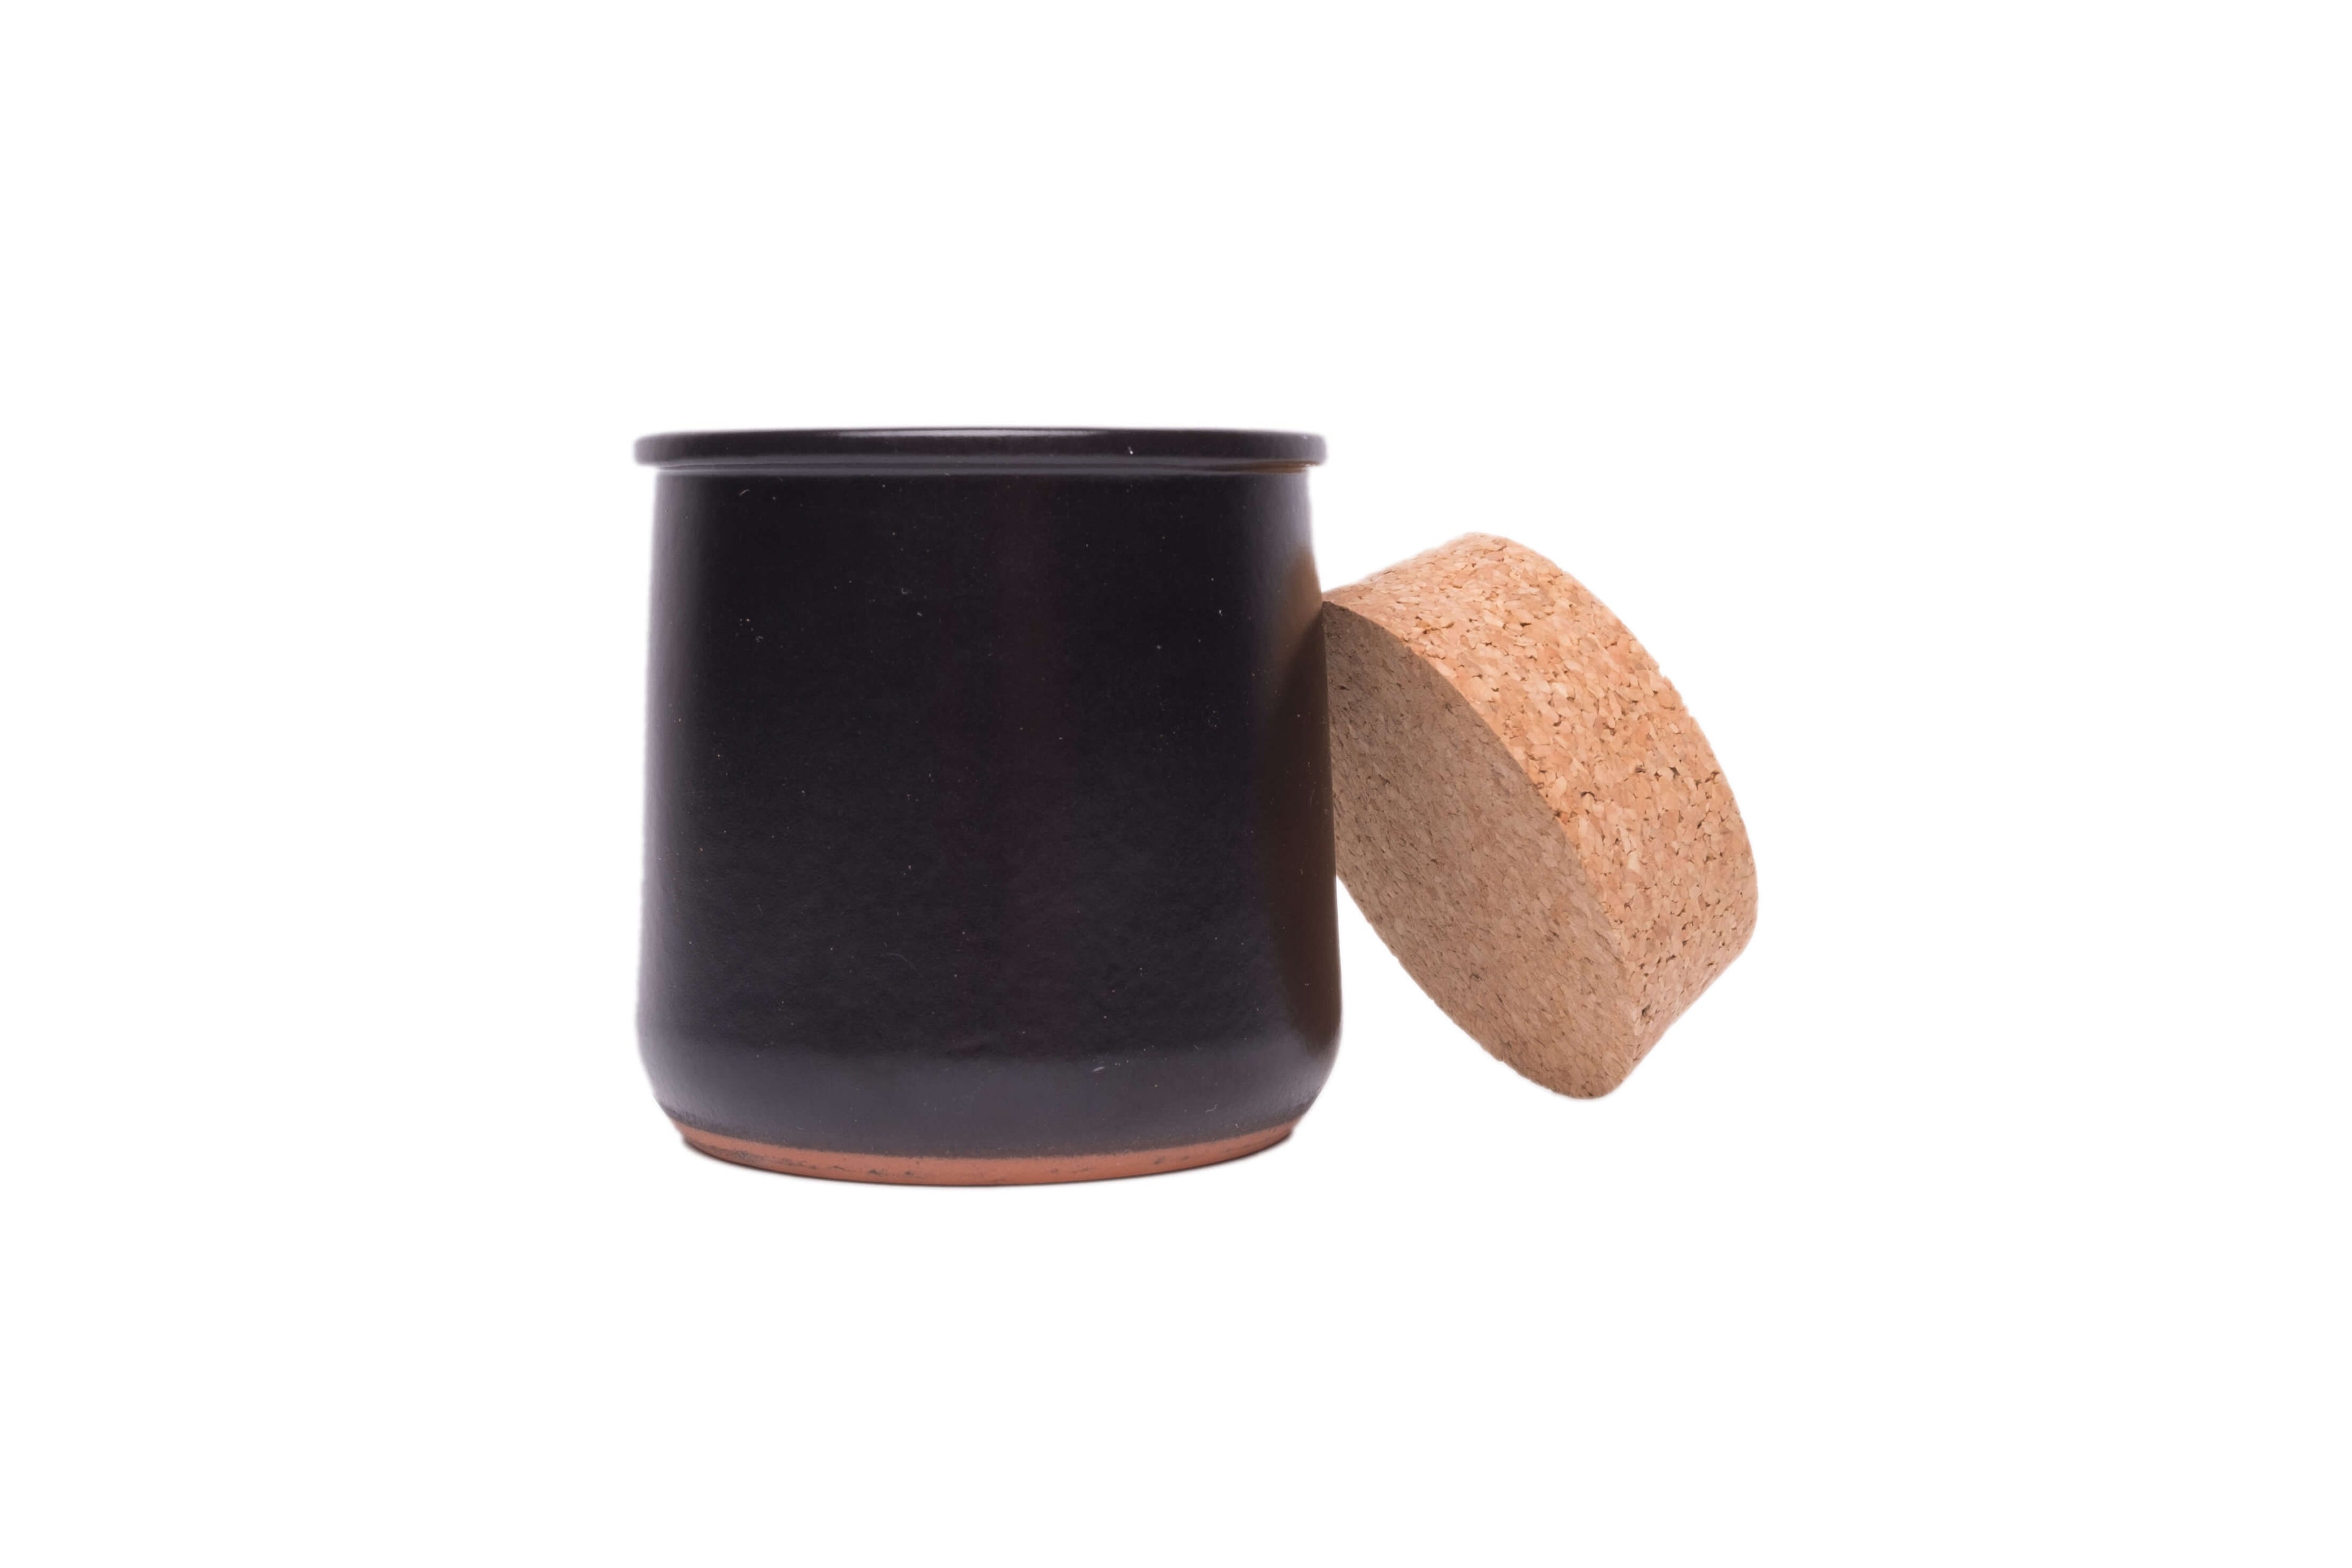 Aromaschutzdose aus Keramik mit Korkdeckel